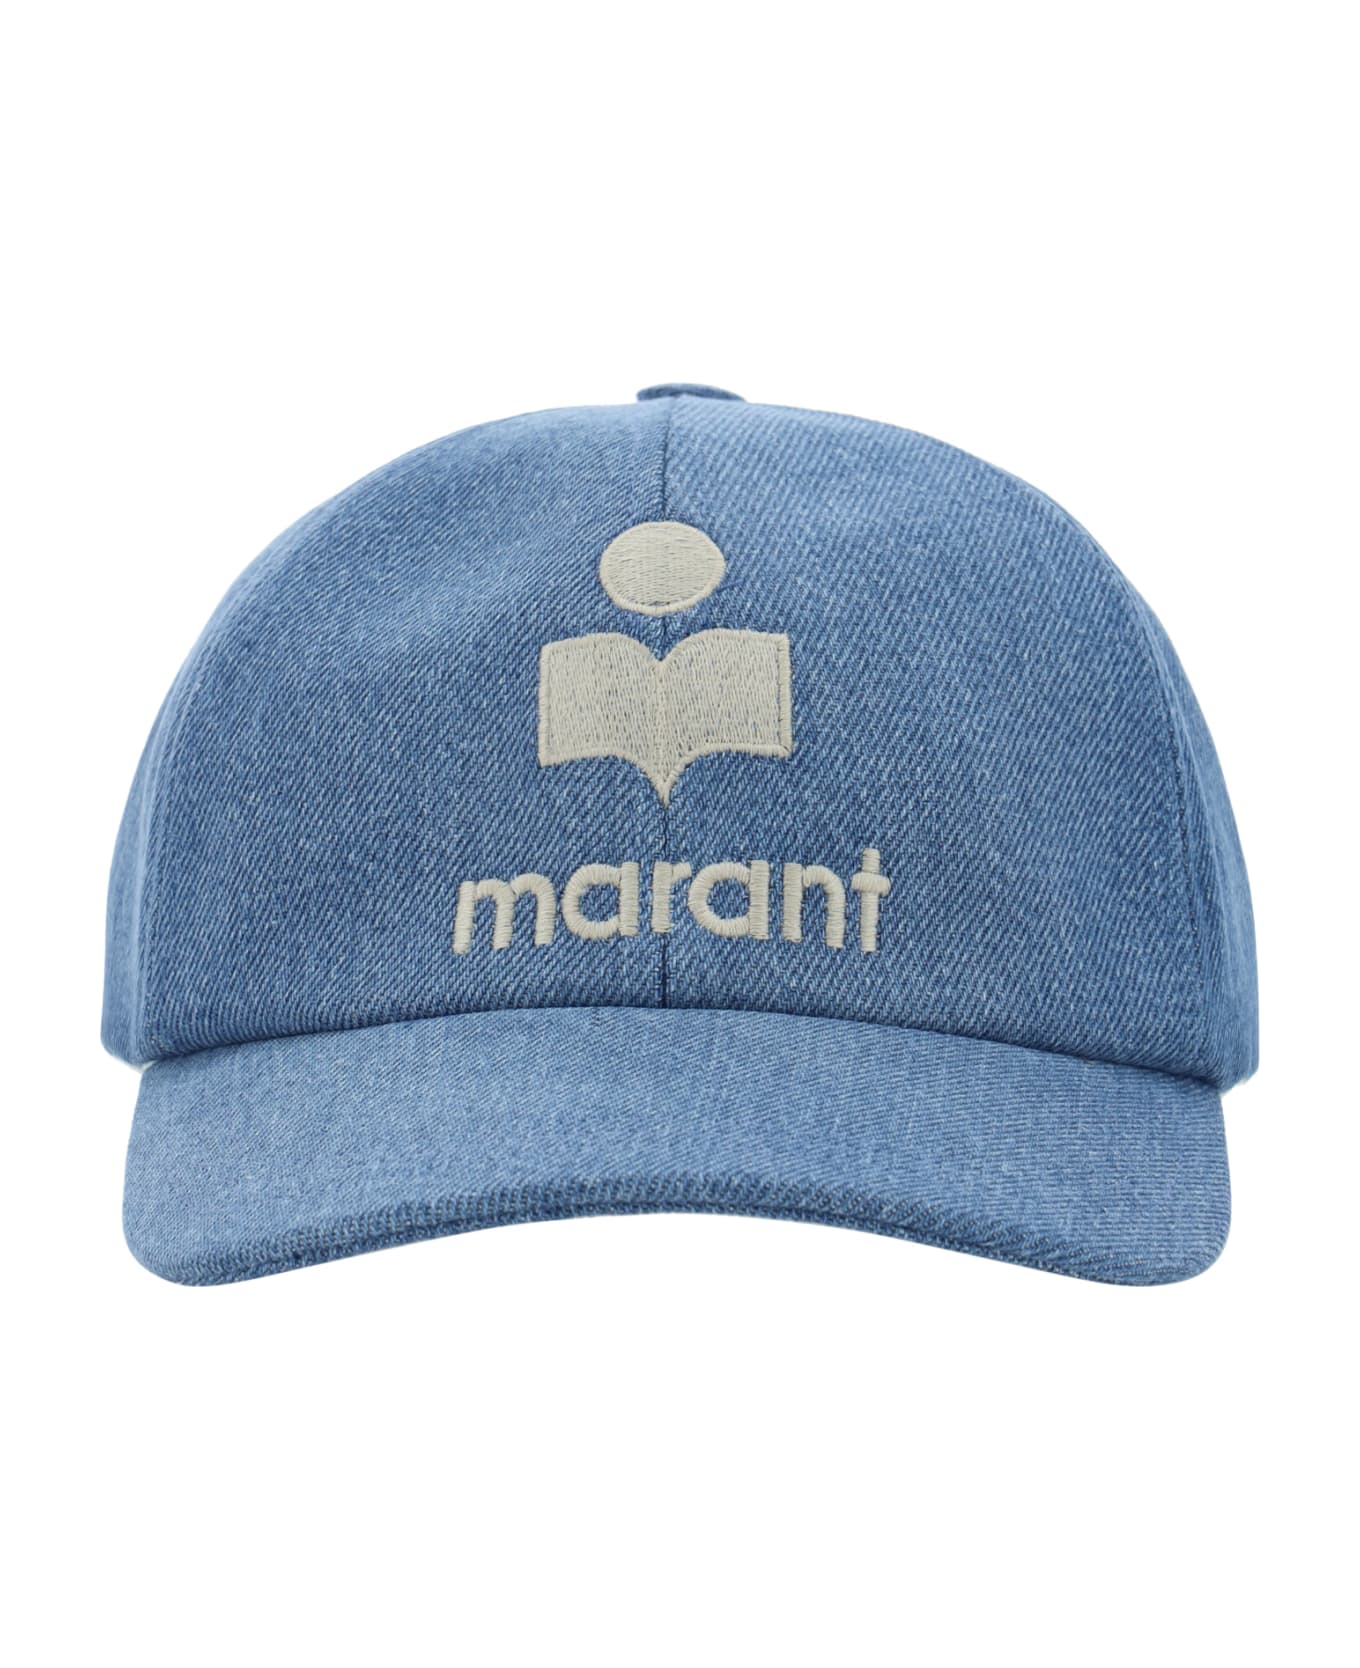 Isabel Marant Baseball Cap - Established Curved Peak Cap